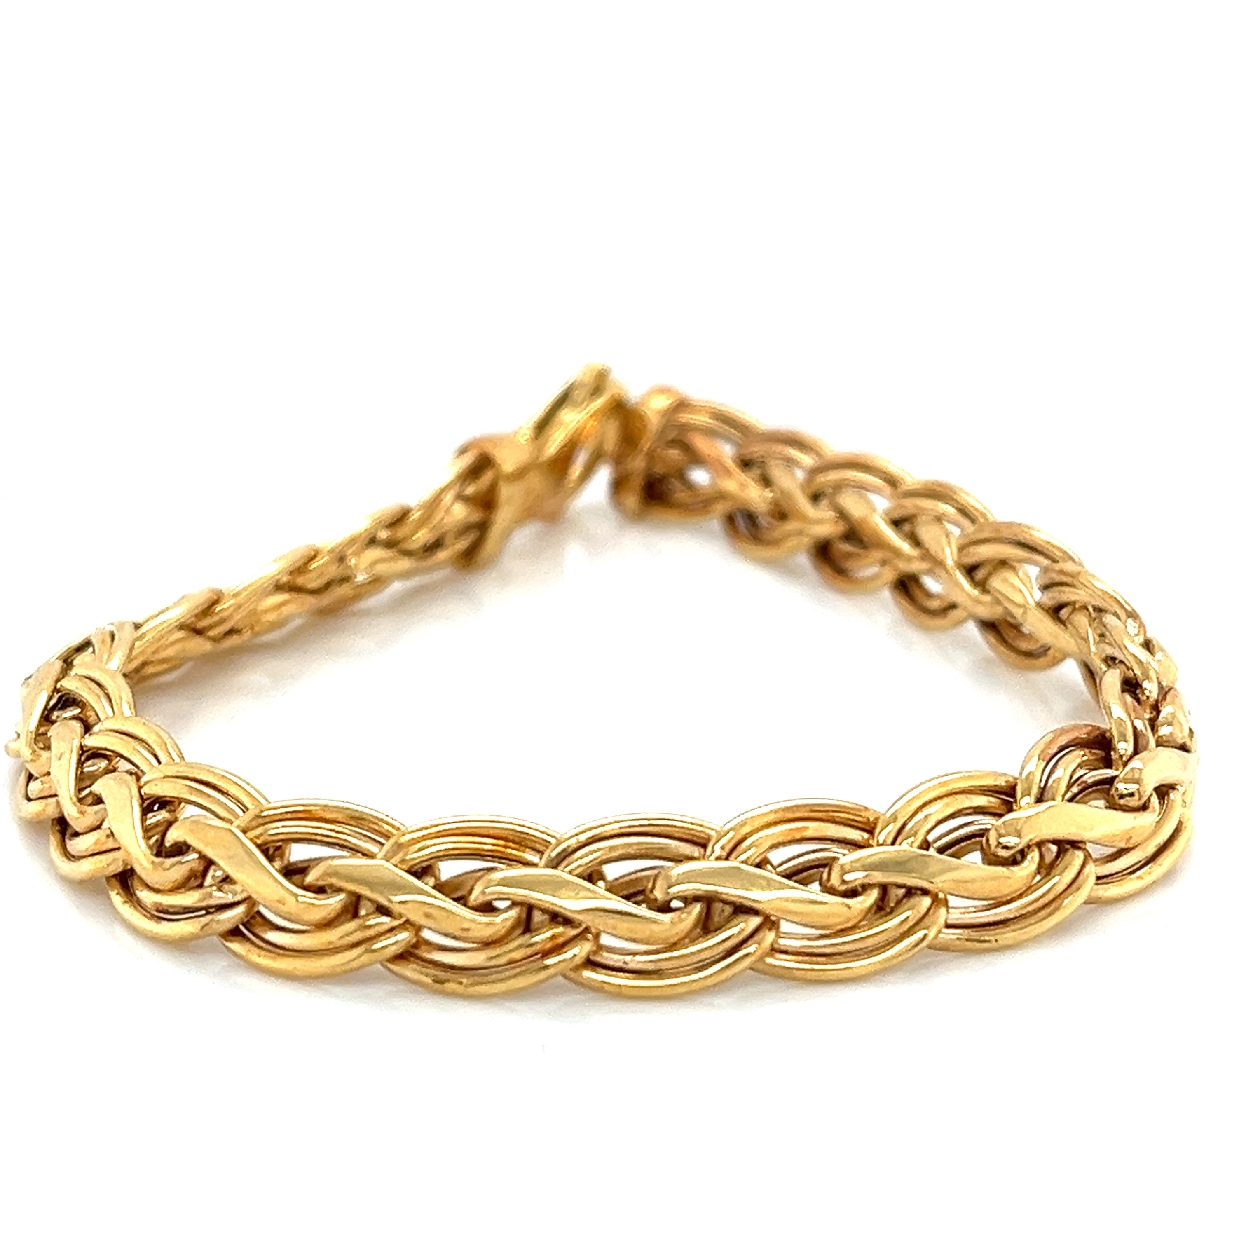 14kt twist braid bracelet 7.5 inches